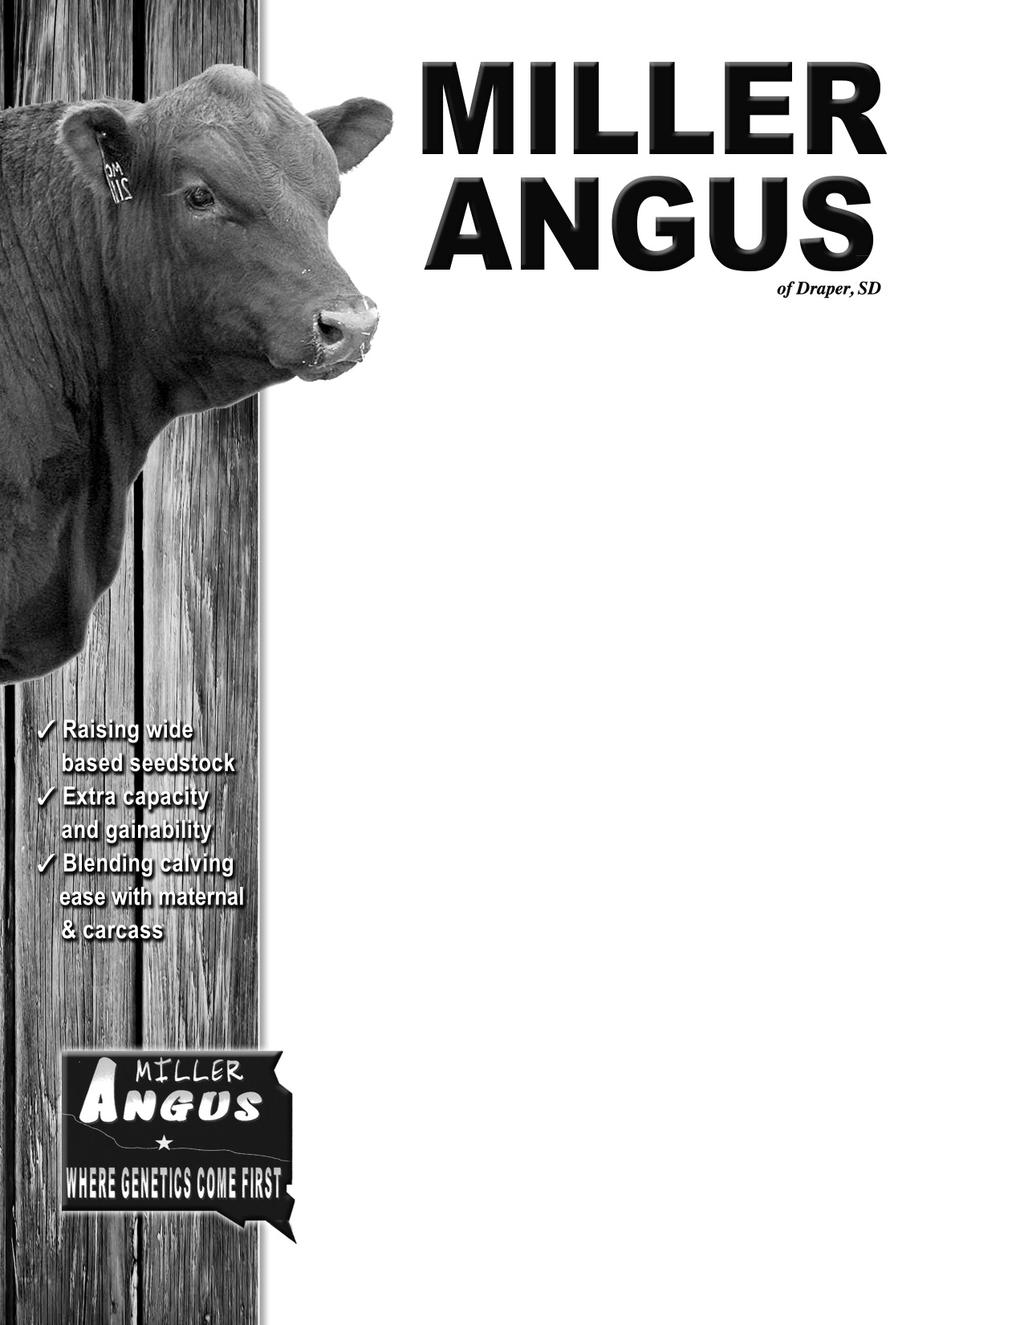 34 rd Annual Angus Bull Sale Monday, April 4, 2016 1:00 p.m.